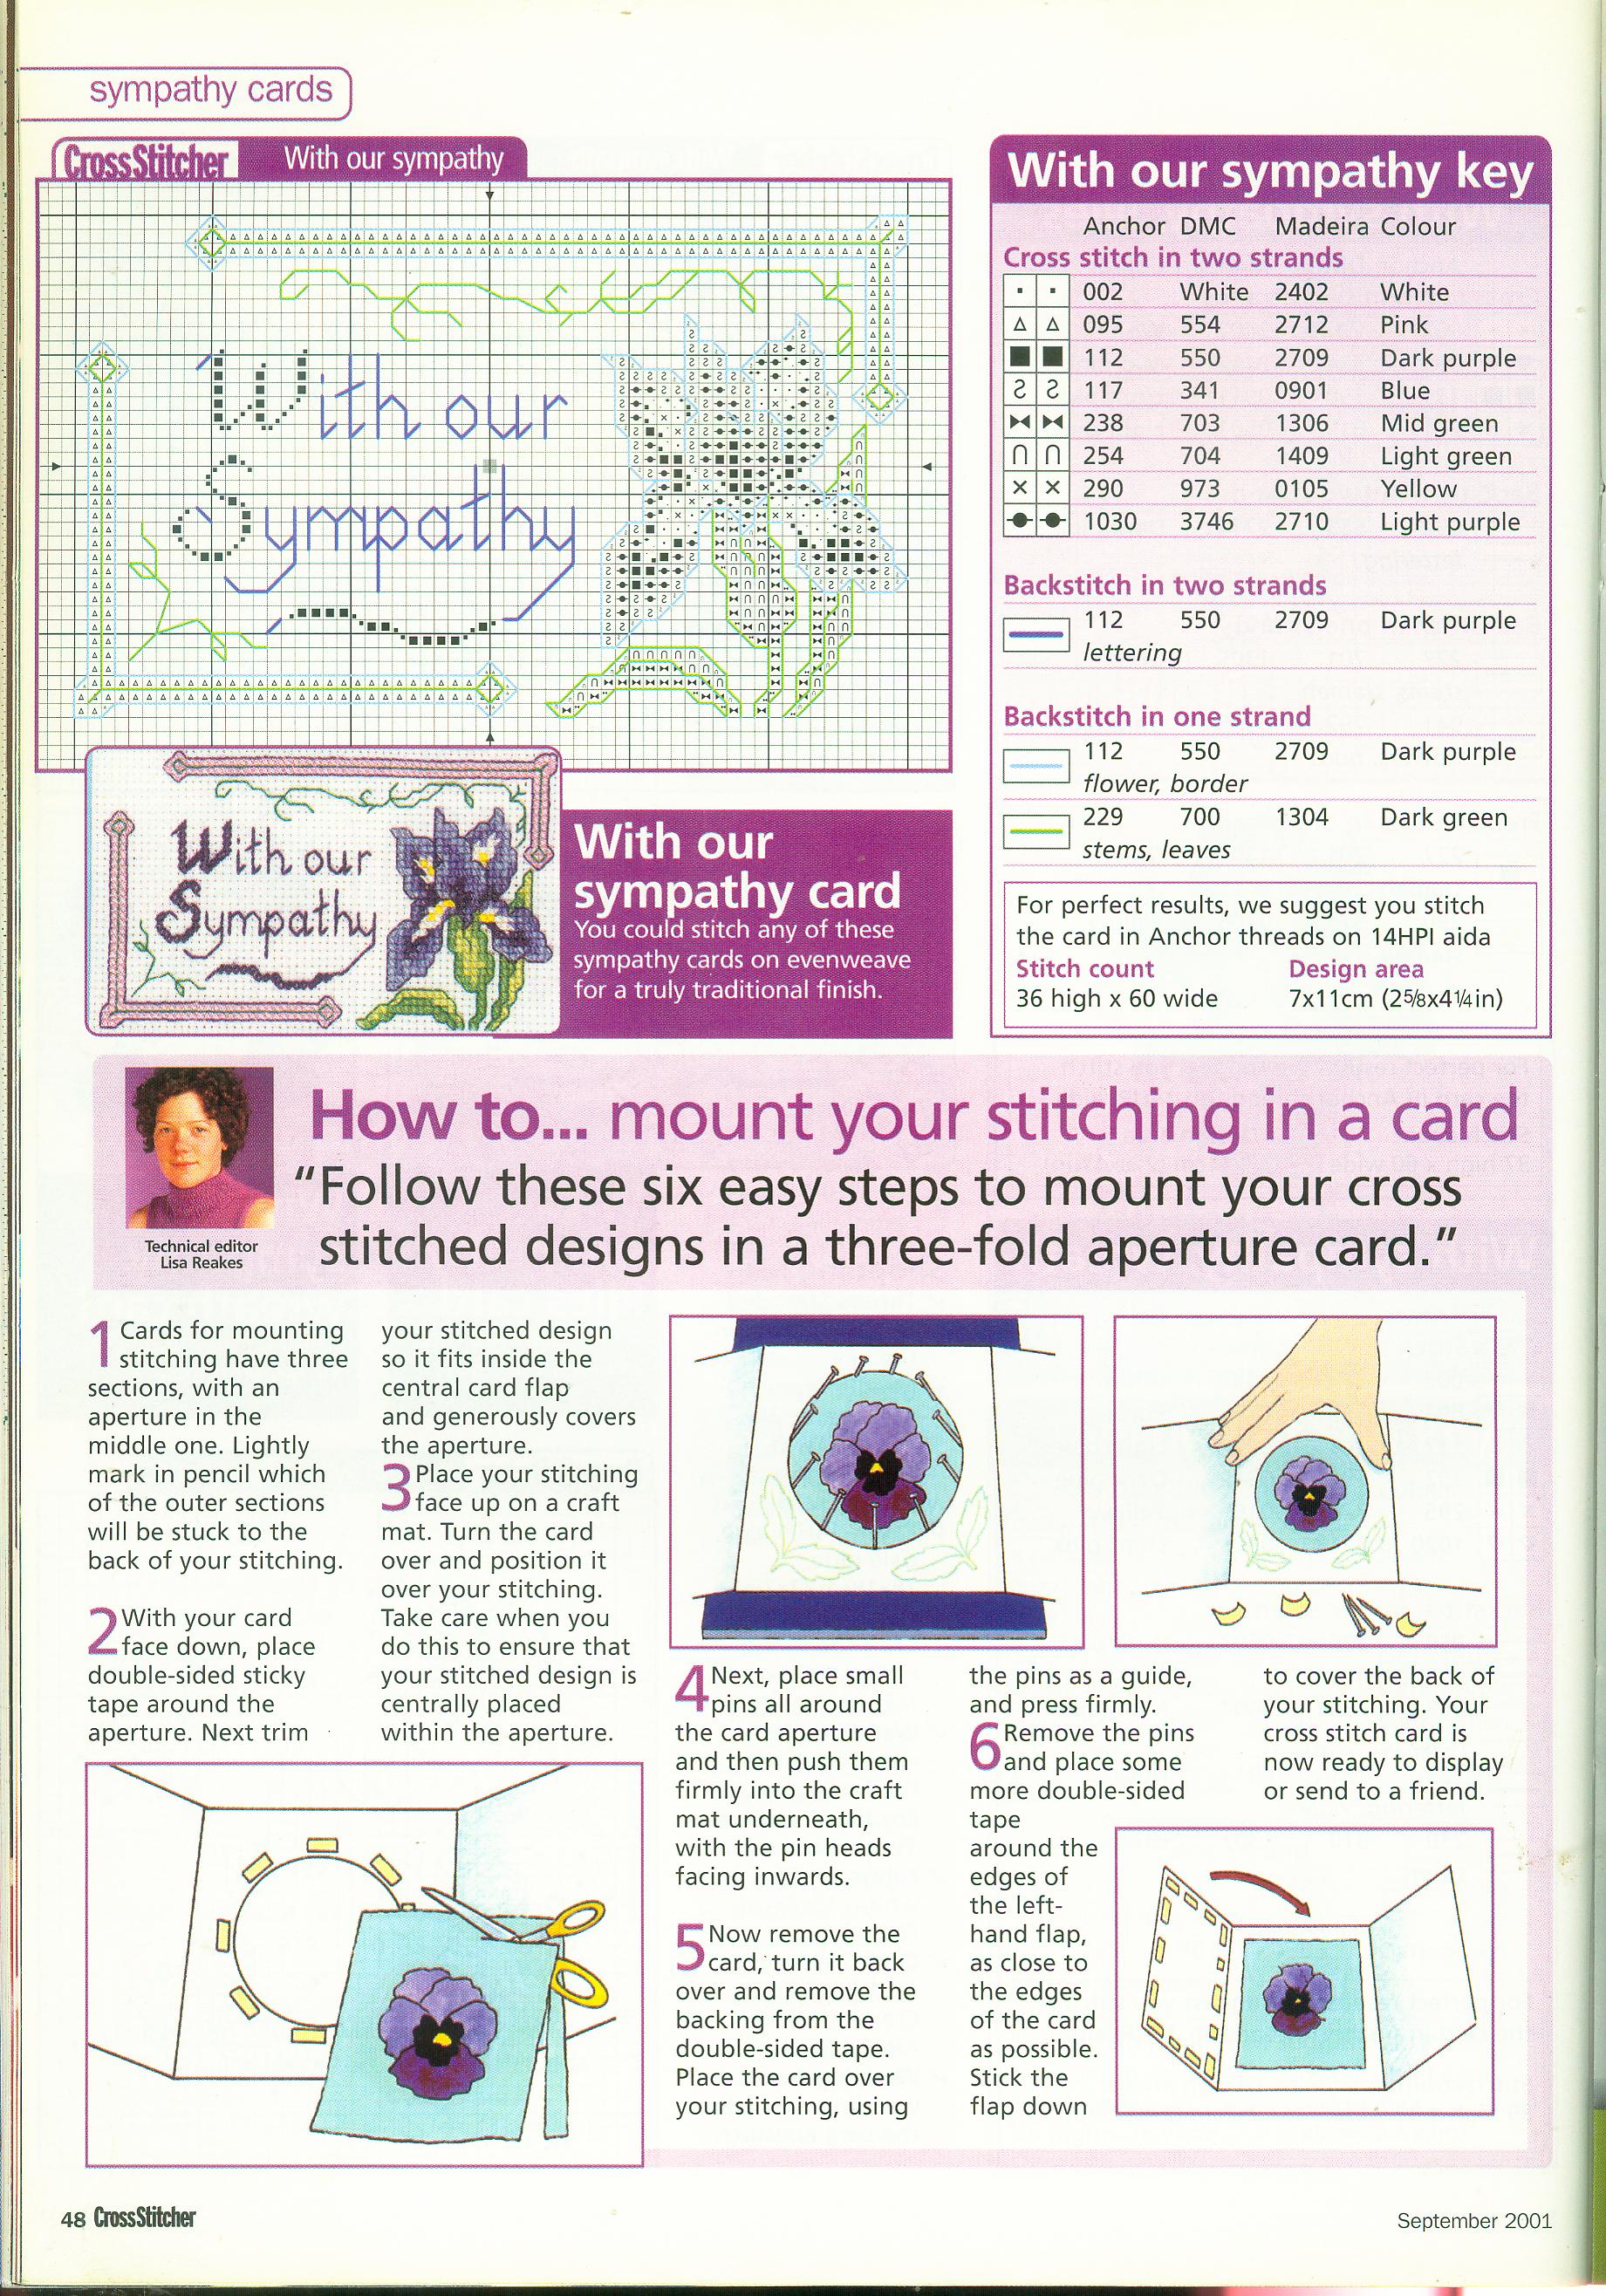 Cross stitch postcards to remember (5)